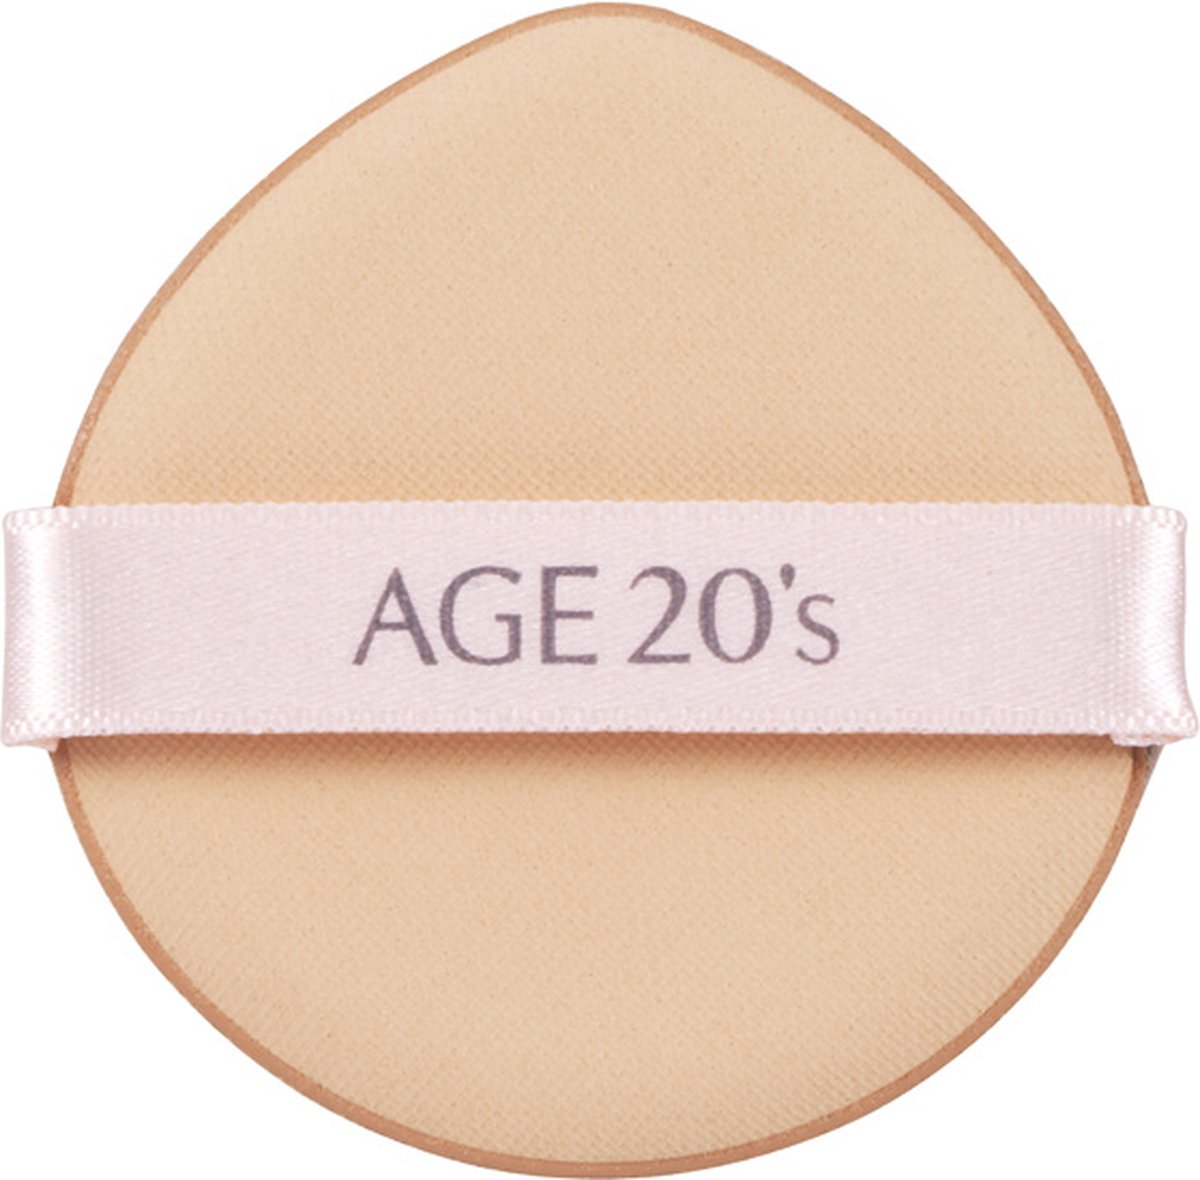 Age 20s - Signature Essence Cover Pact Moisture + Refill - #23 Medium Beige